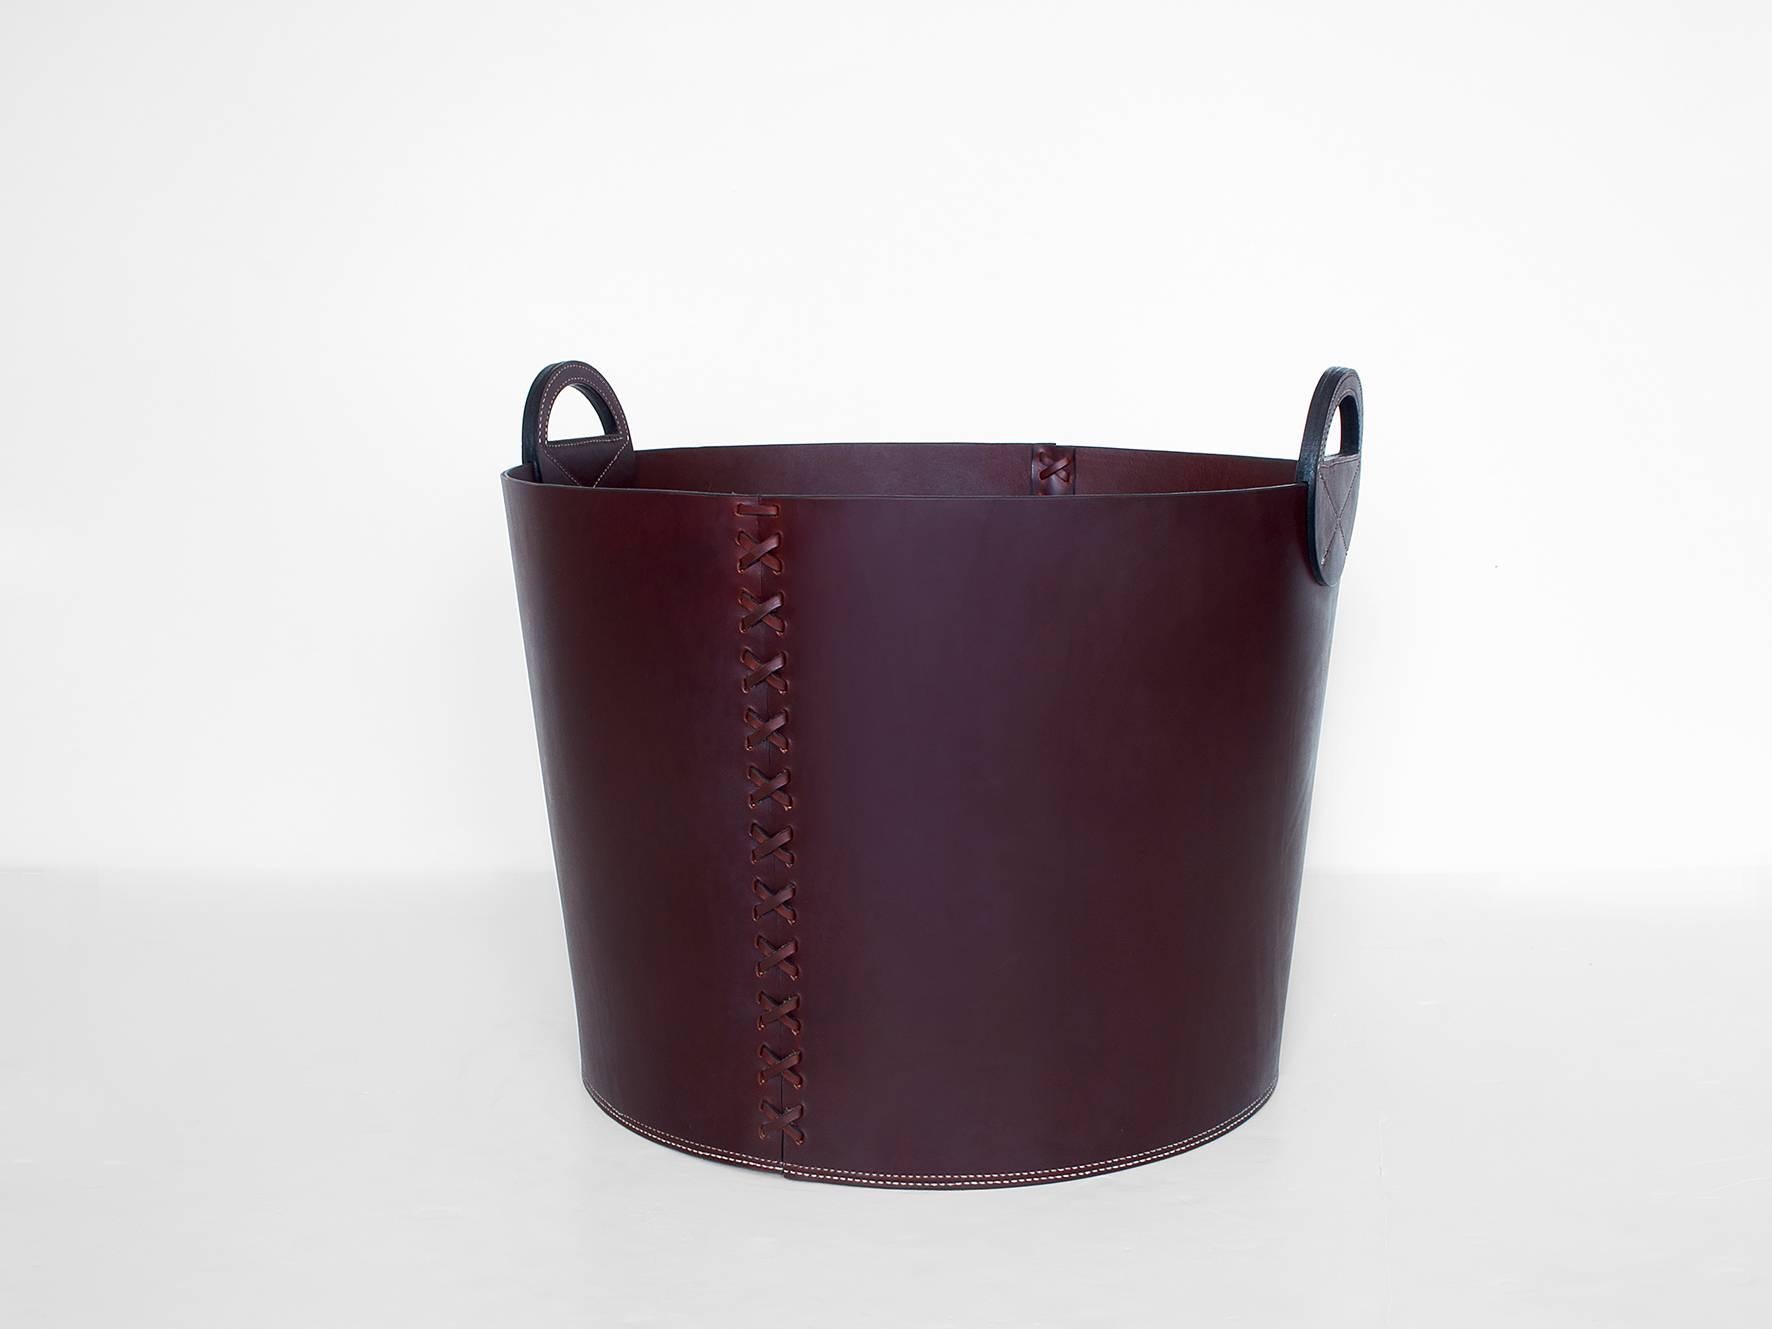 American Craftsman Leather Bushel Basket with White Oak or Aromatic Cedar Bottom For Sale